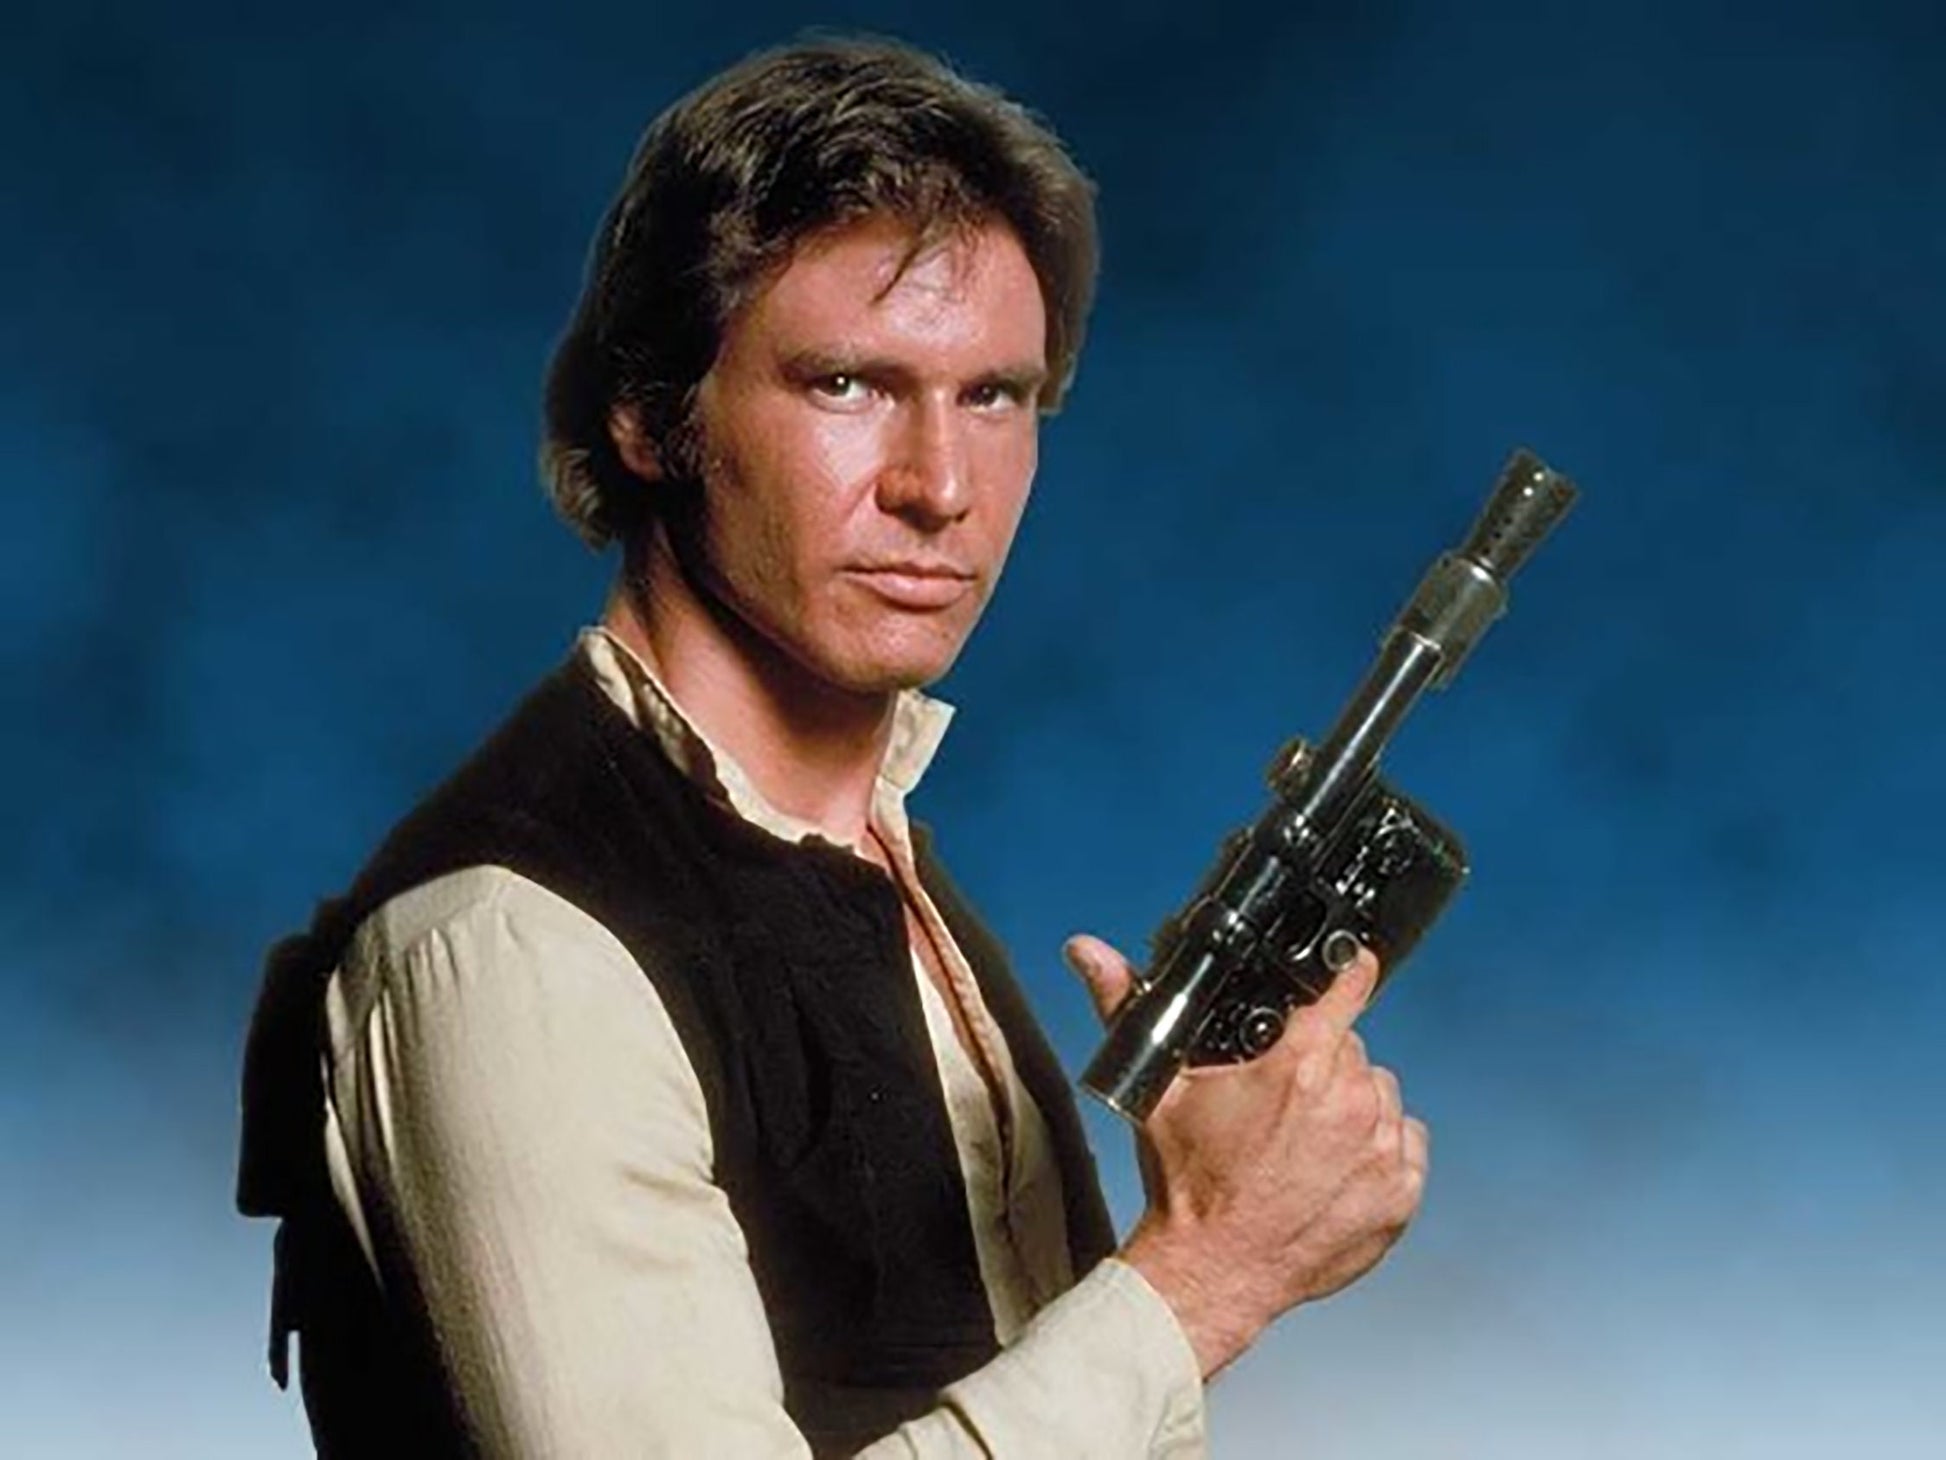 Han Solo Blaster DL-44 Pistol Prop Replica Star Wars Cosplay Gun